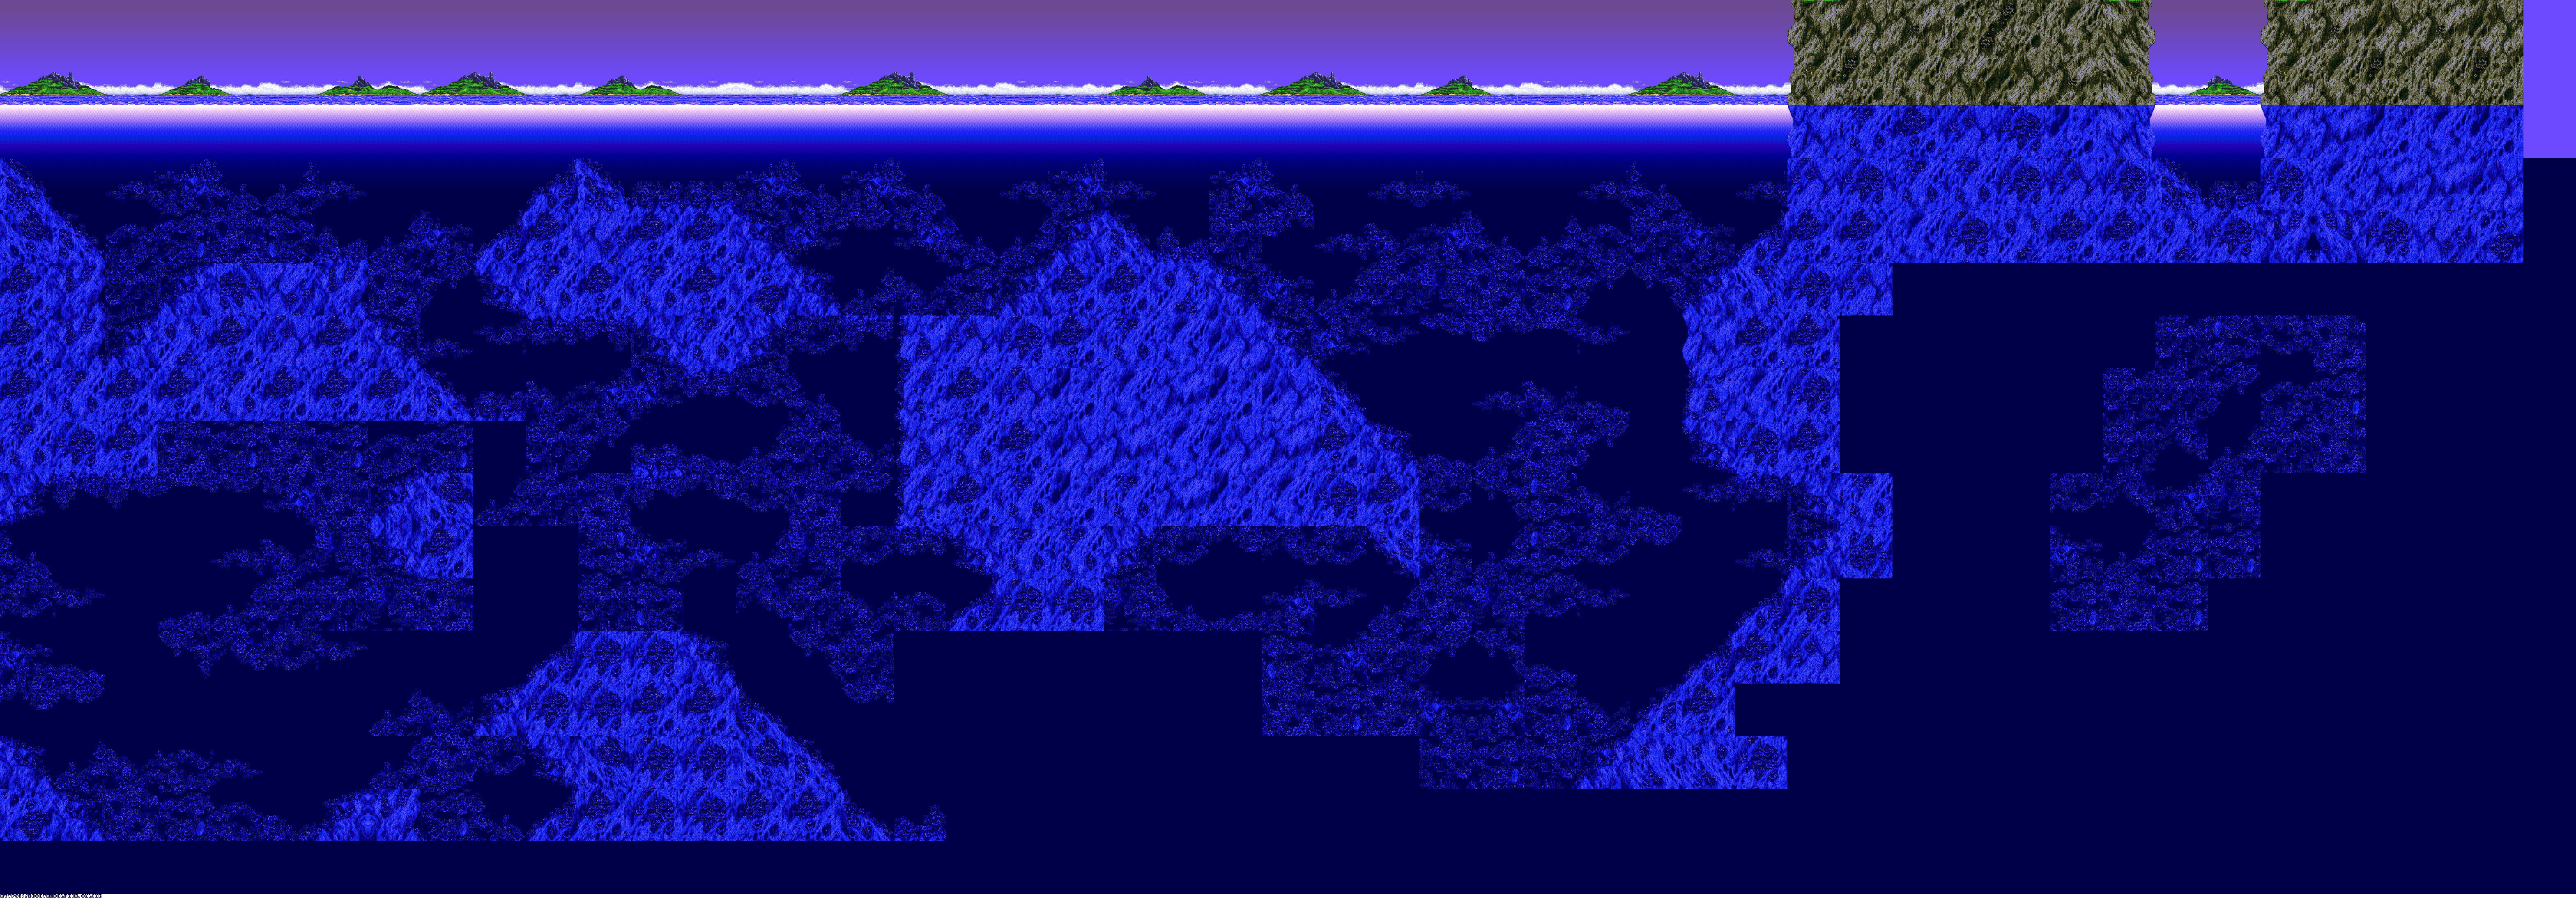 Island Zone (Background)